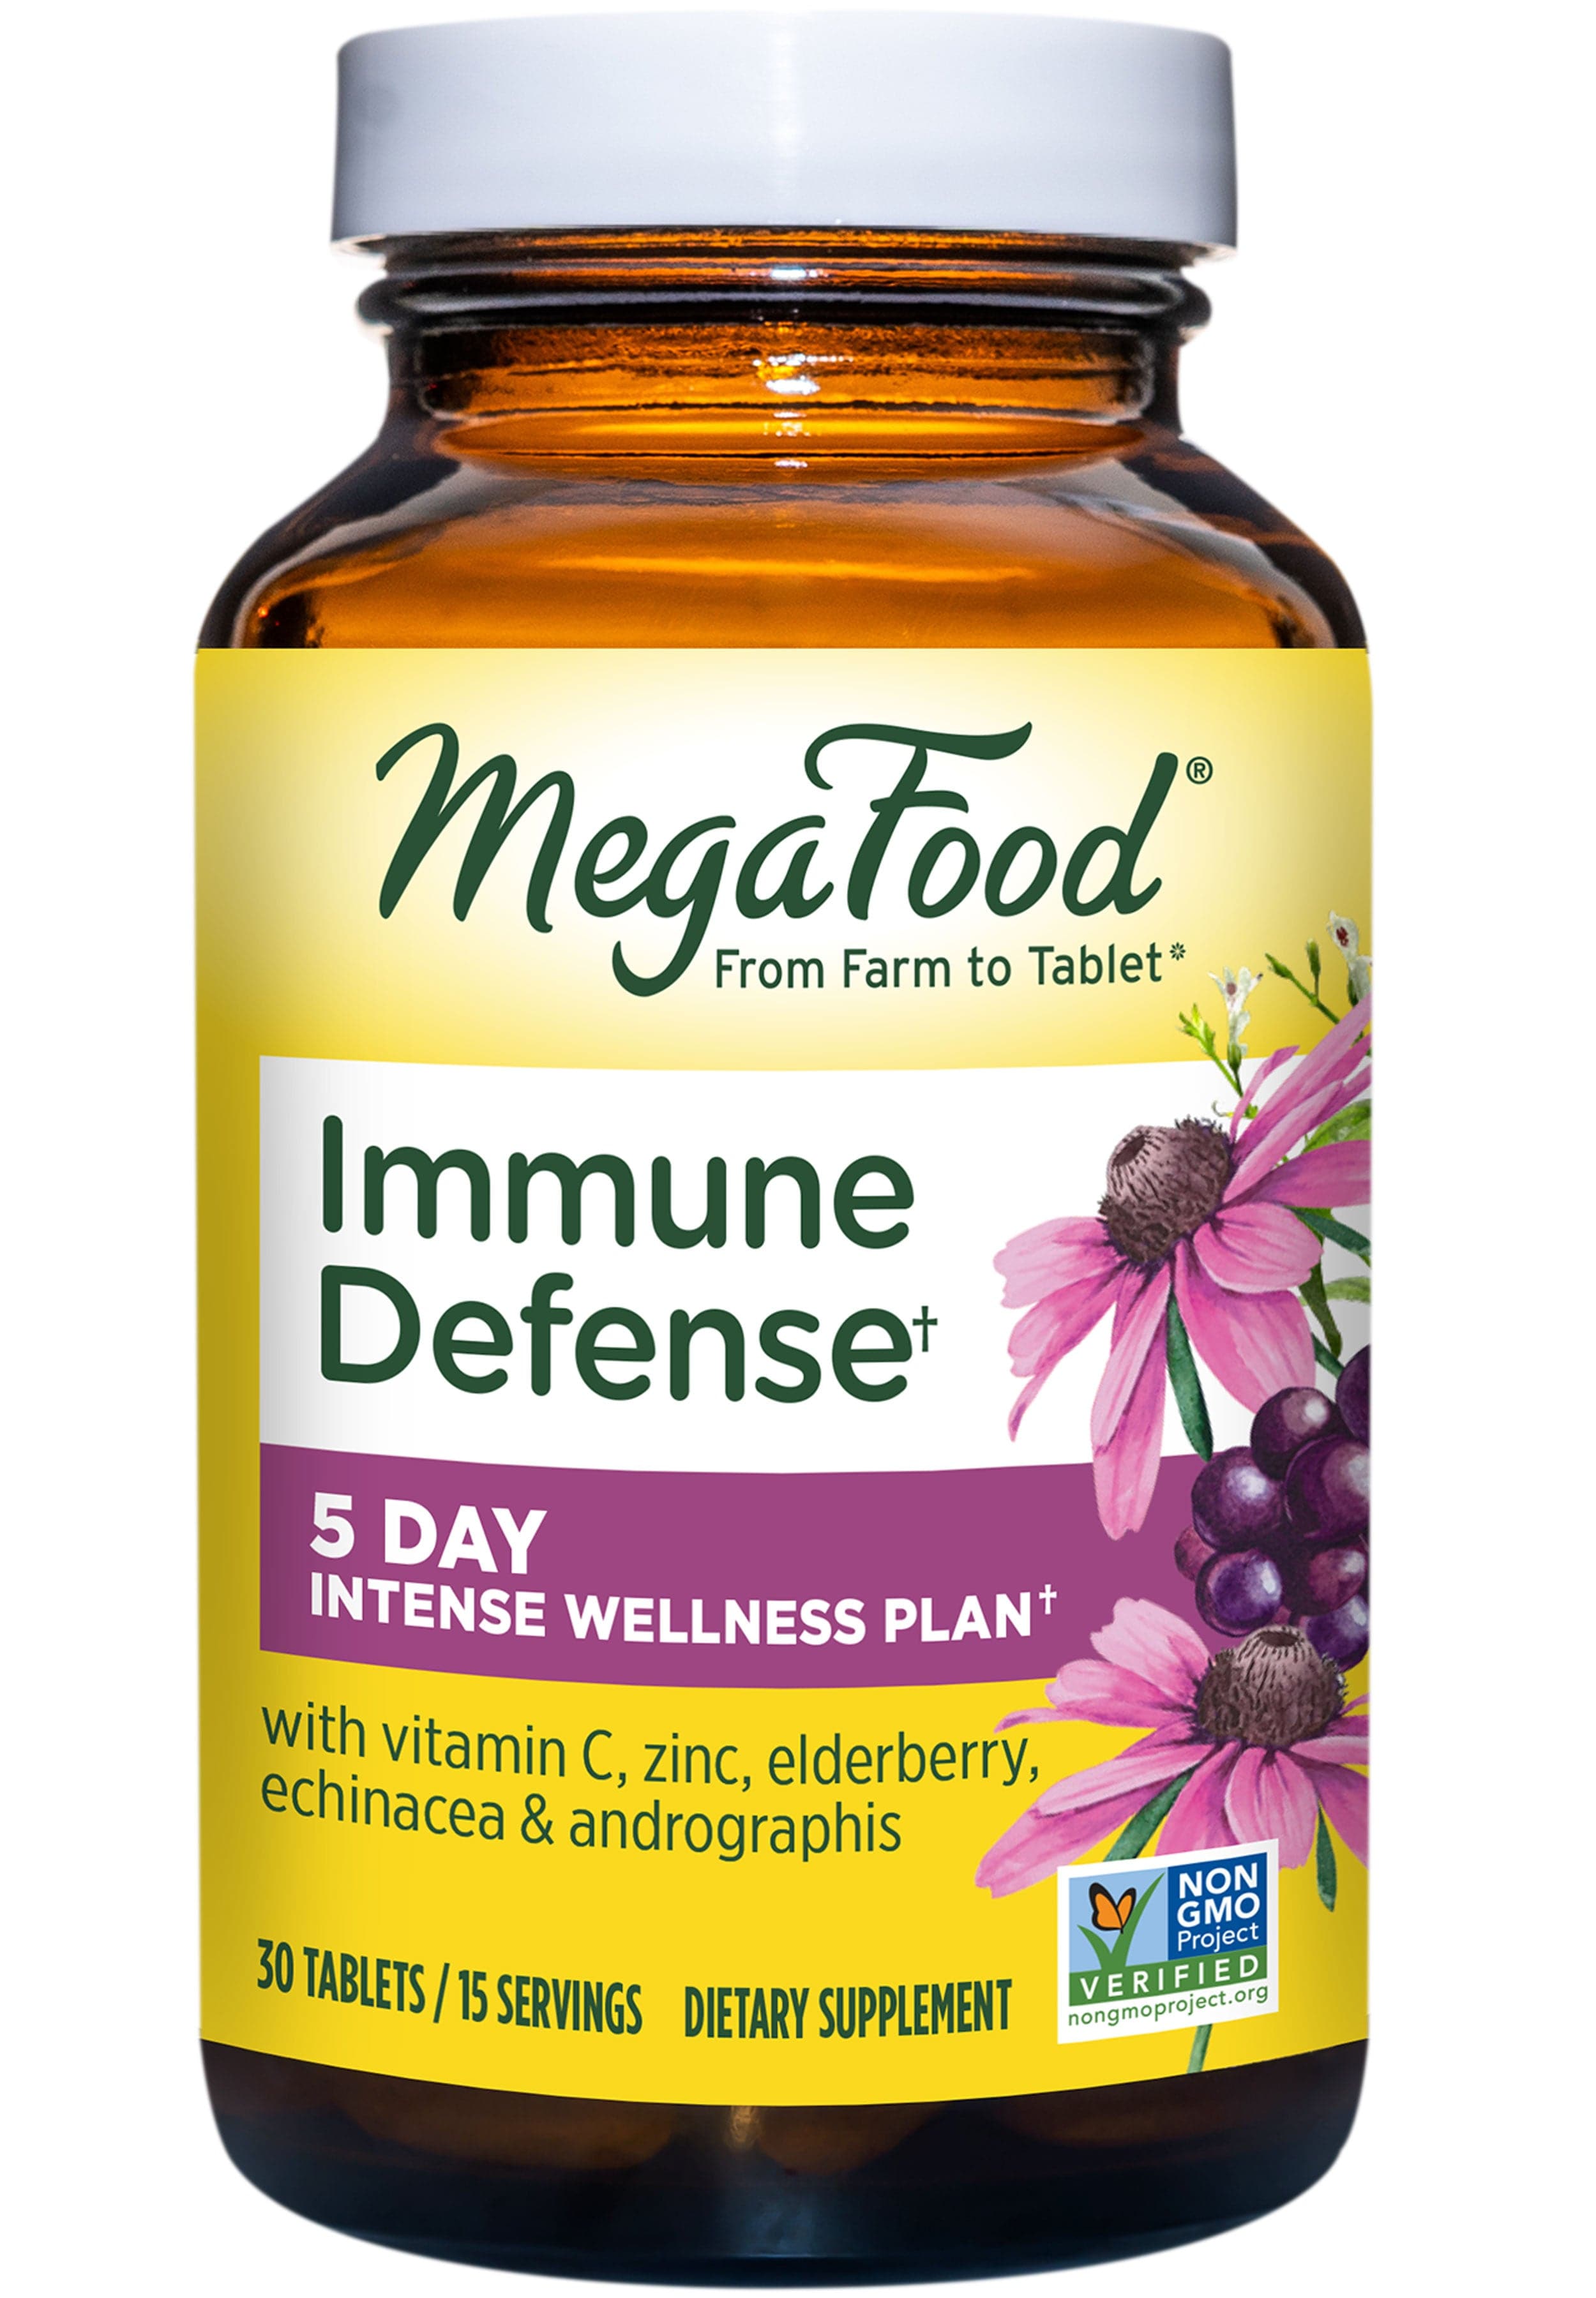 MegaFood Immune Defense